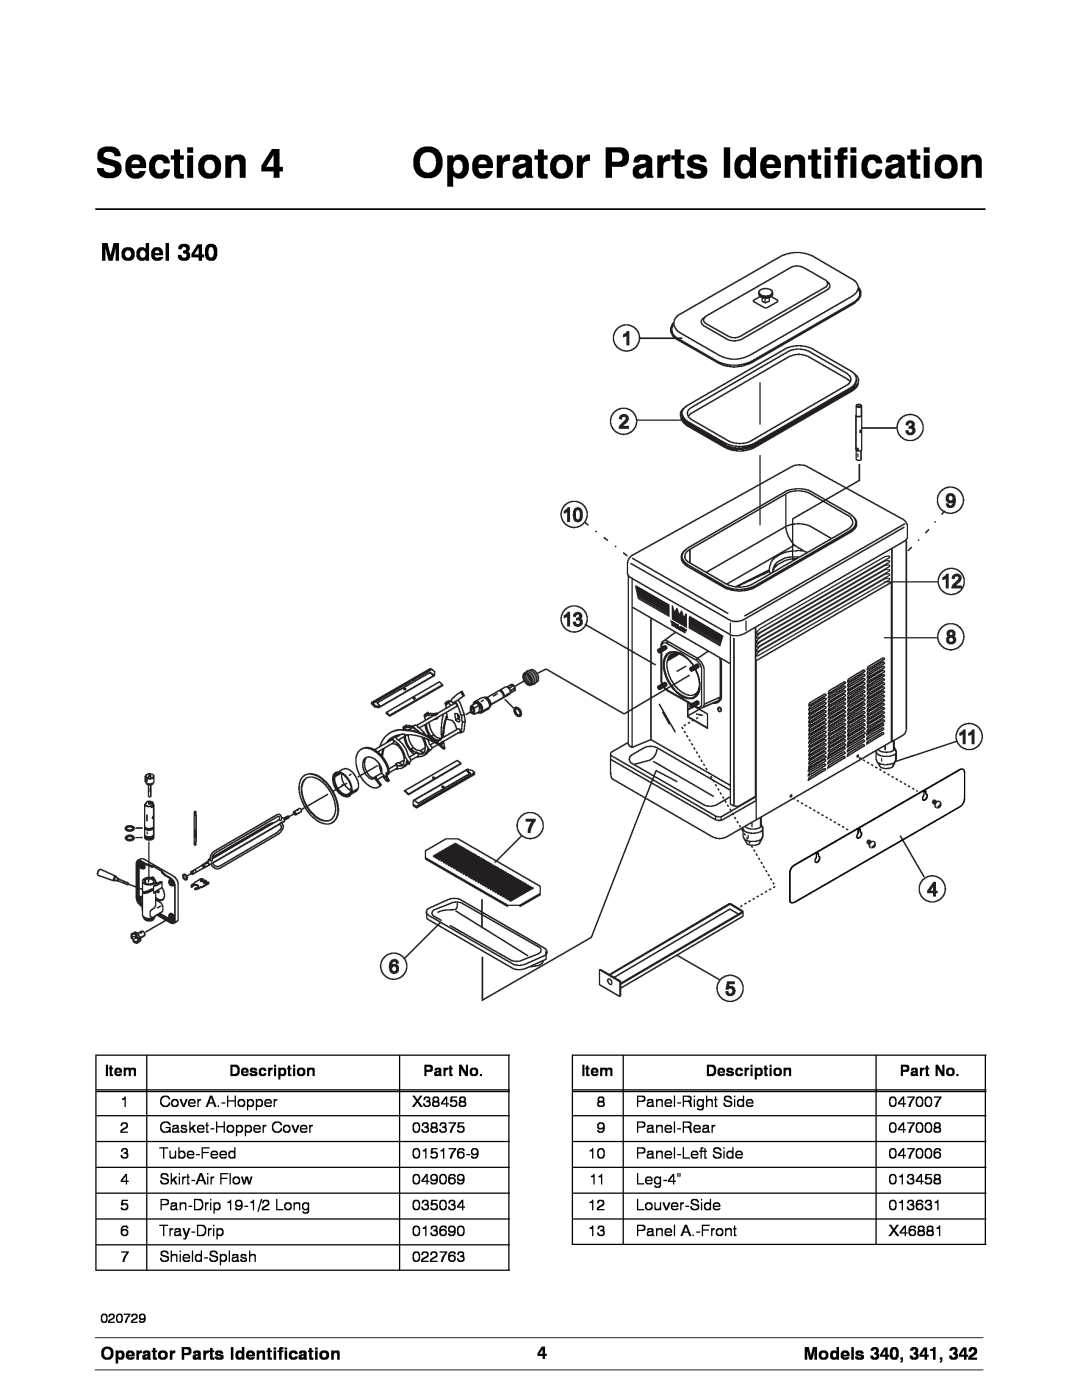 Taylor 342 manual Operator Parts Identification, Models 340, 341, Description 